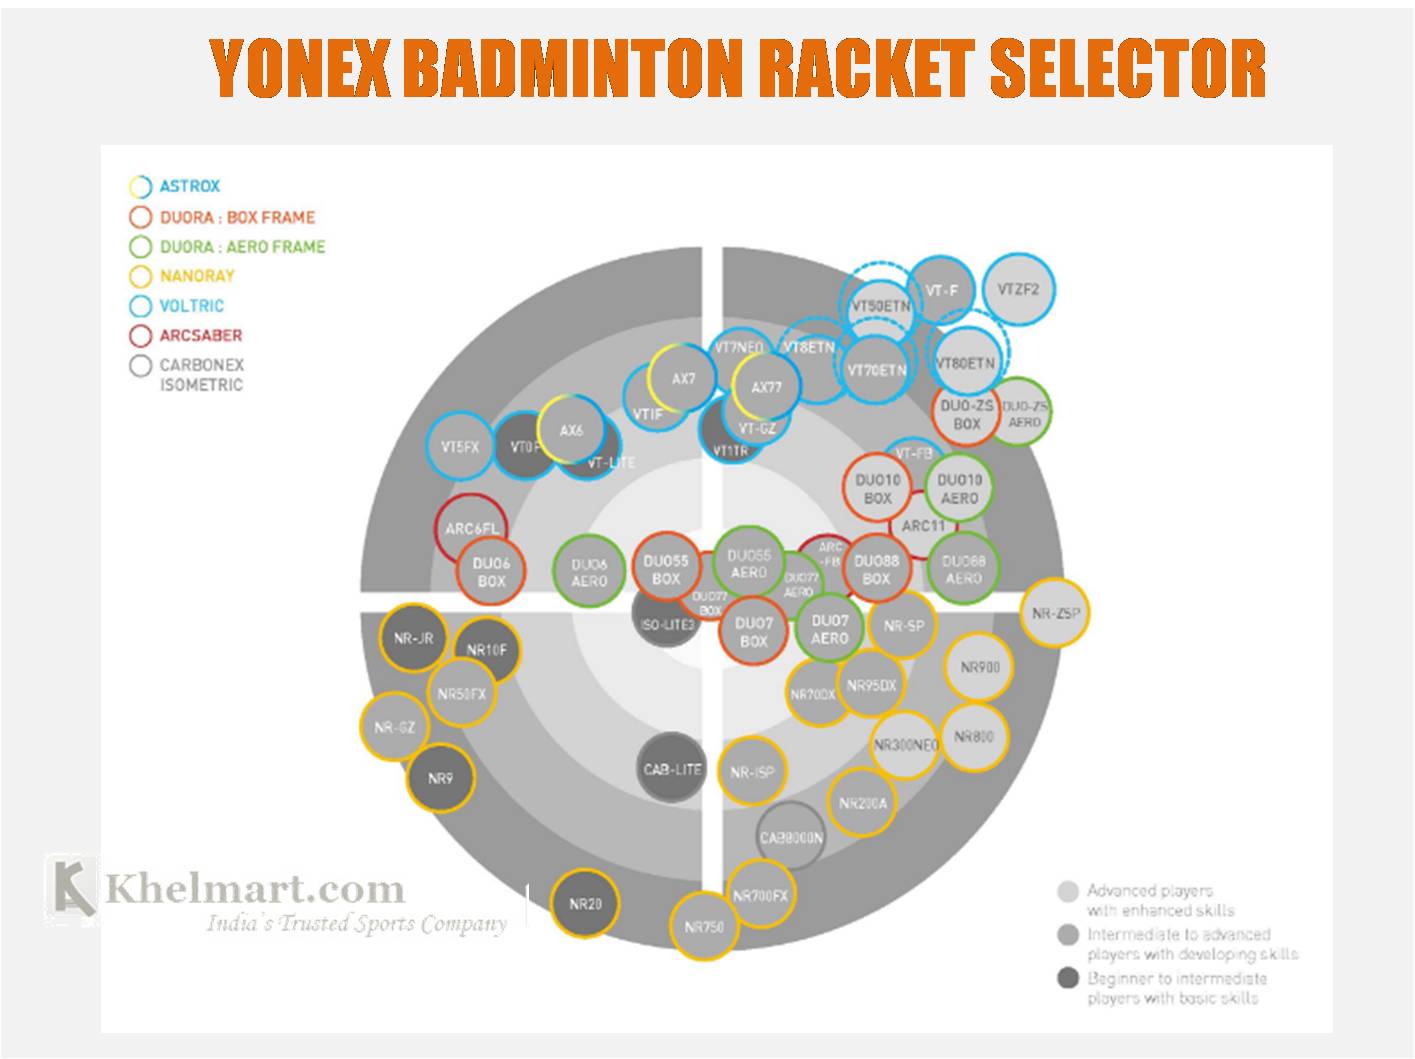 Yonex_Badminton_Rackets_Selector_Mapping_all_rackets_khelmart01.jpg